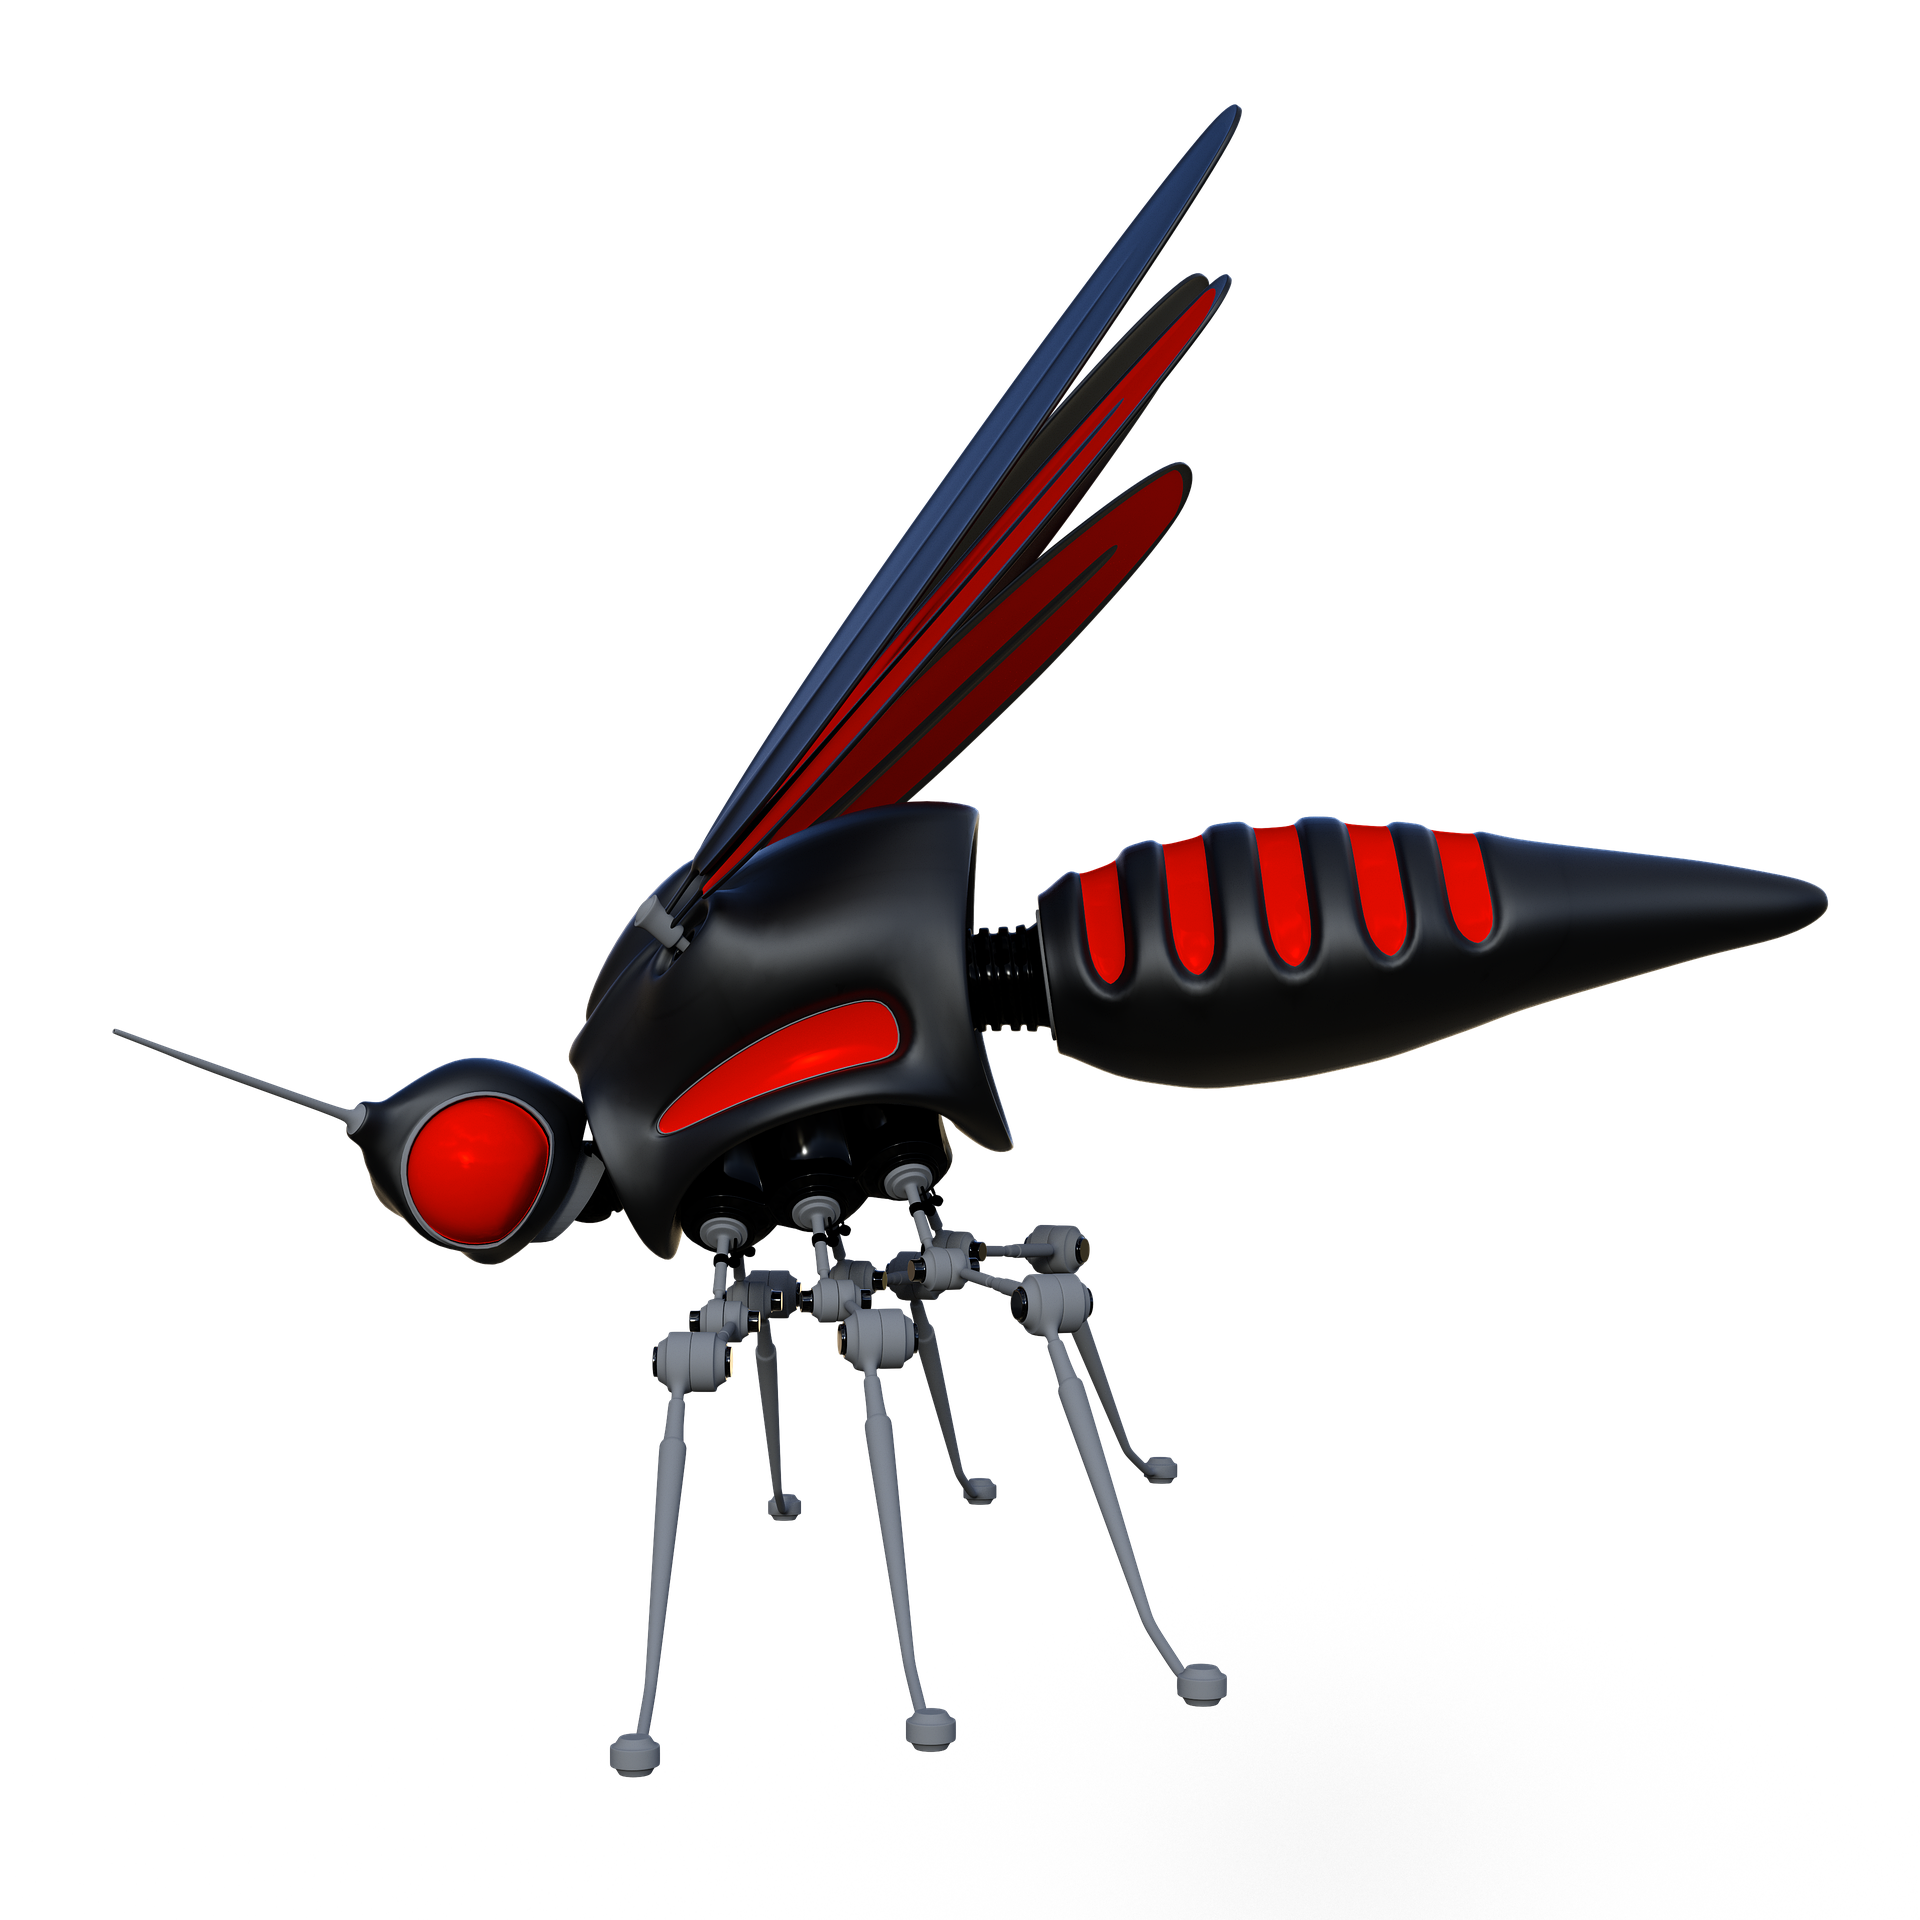 mosquito-robot